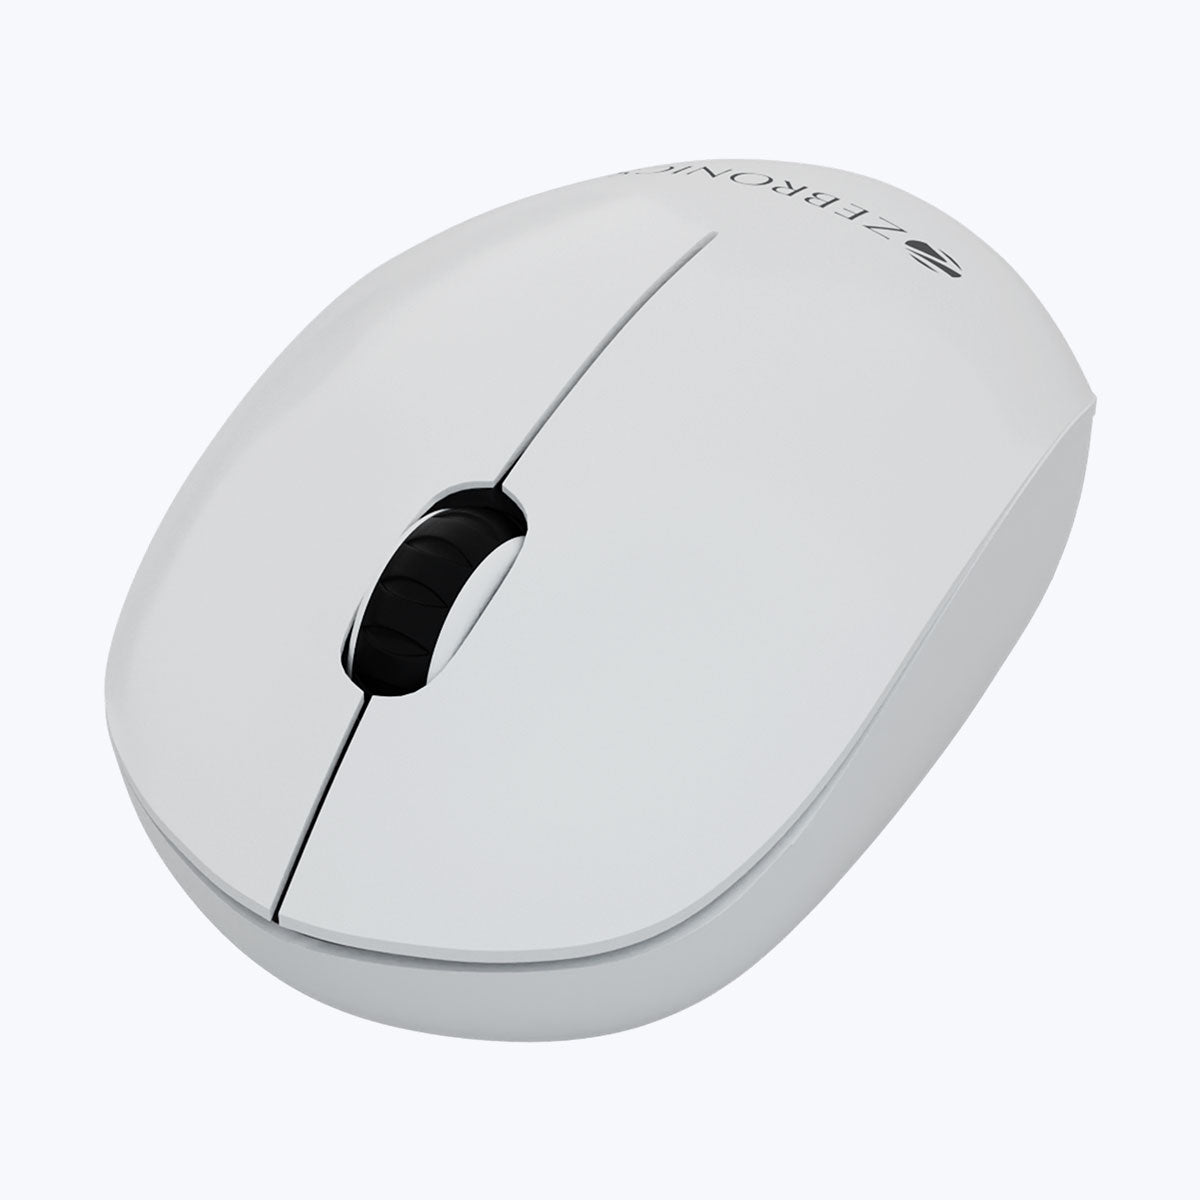 Zeb-Cheetah - Wireless Mouse - Zebronics